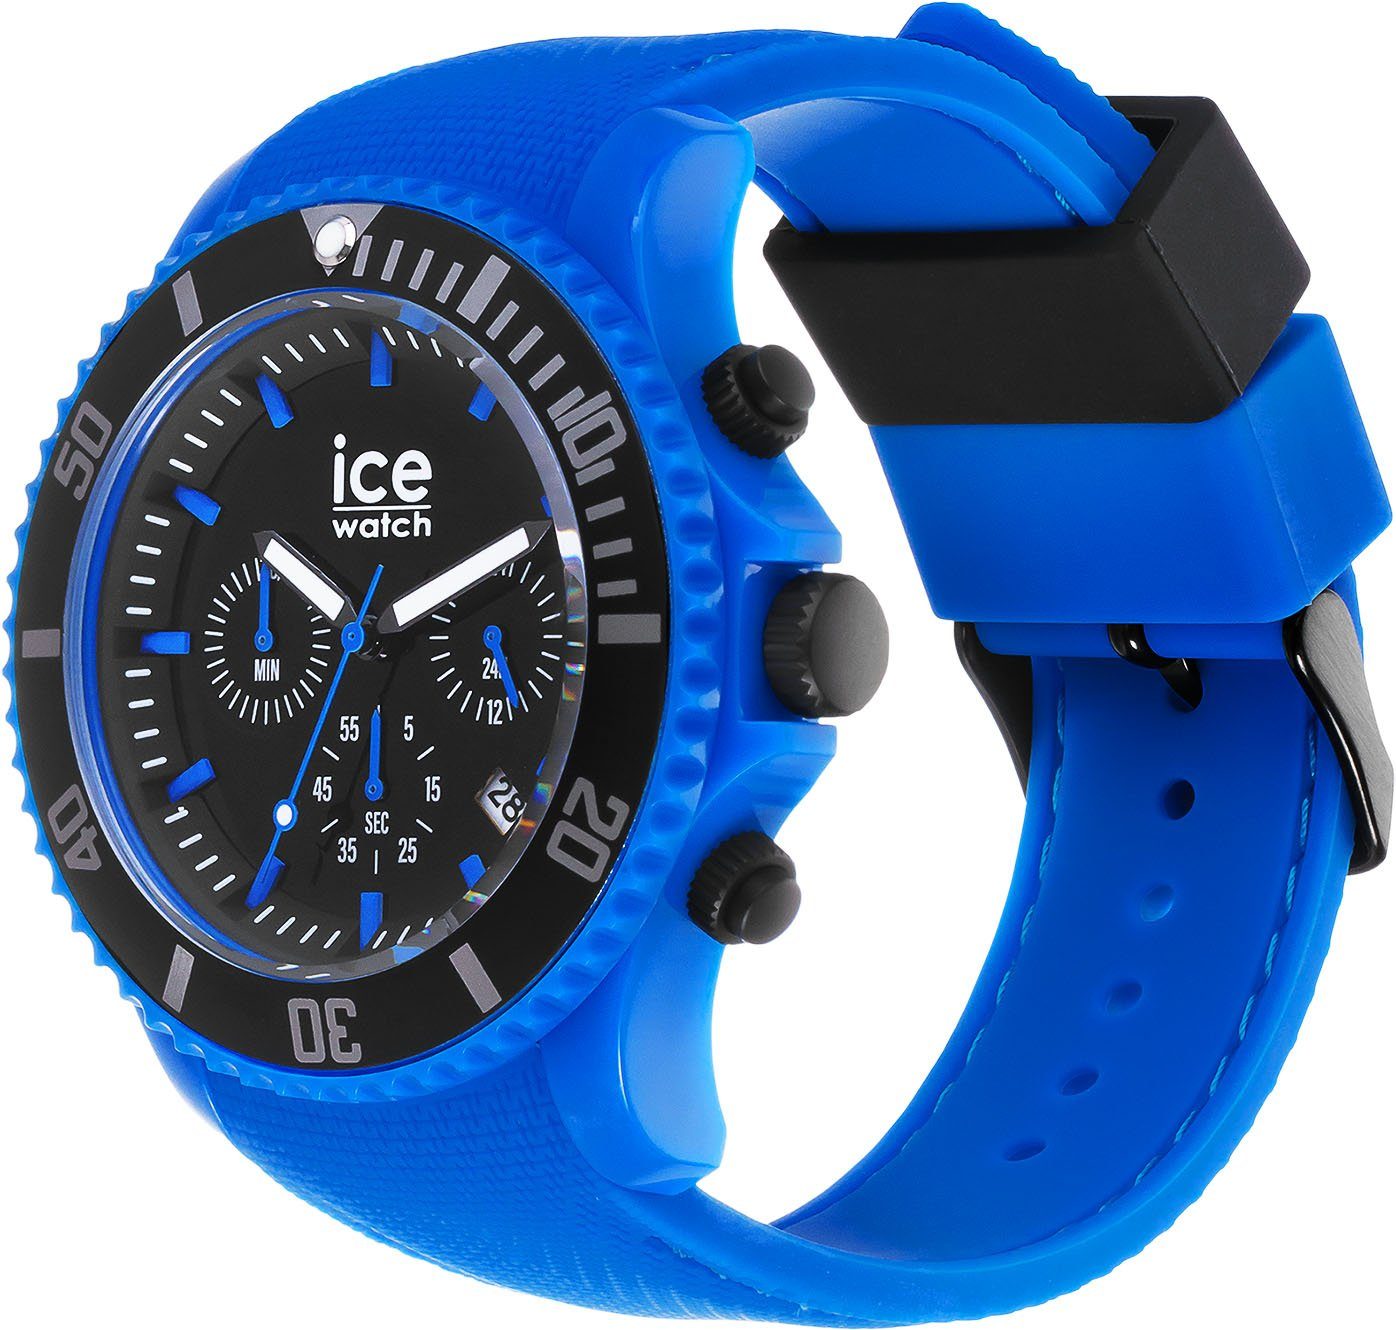 Large - Neon chrono - 019840 blau ice-watch CH, - blue Chronograph ICE